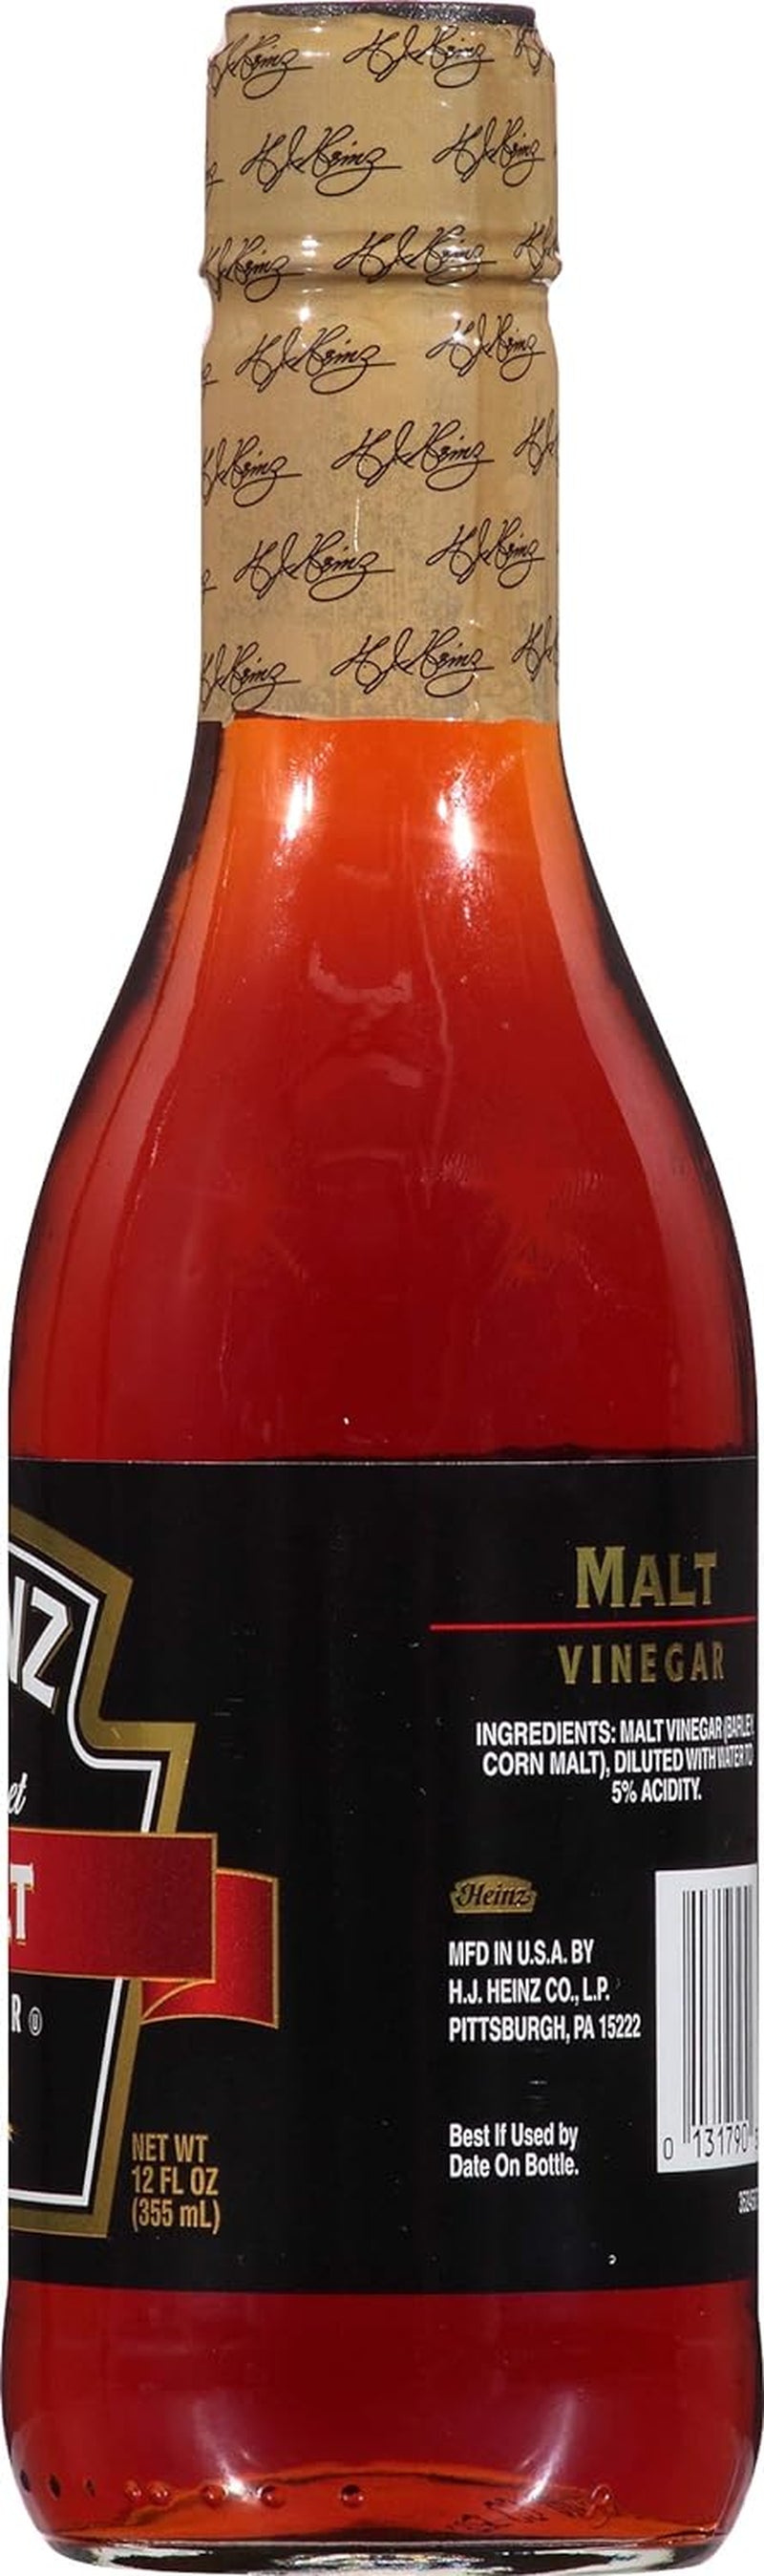 Heinz Gourmet Malt, Vinegar, 12 Fl Oz